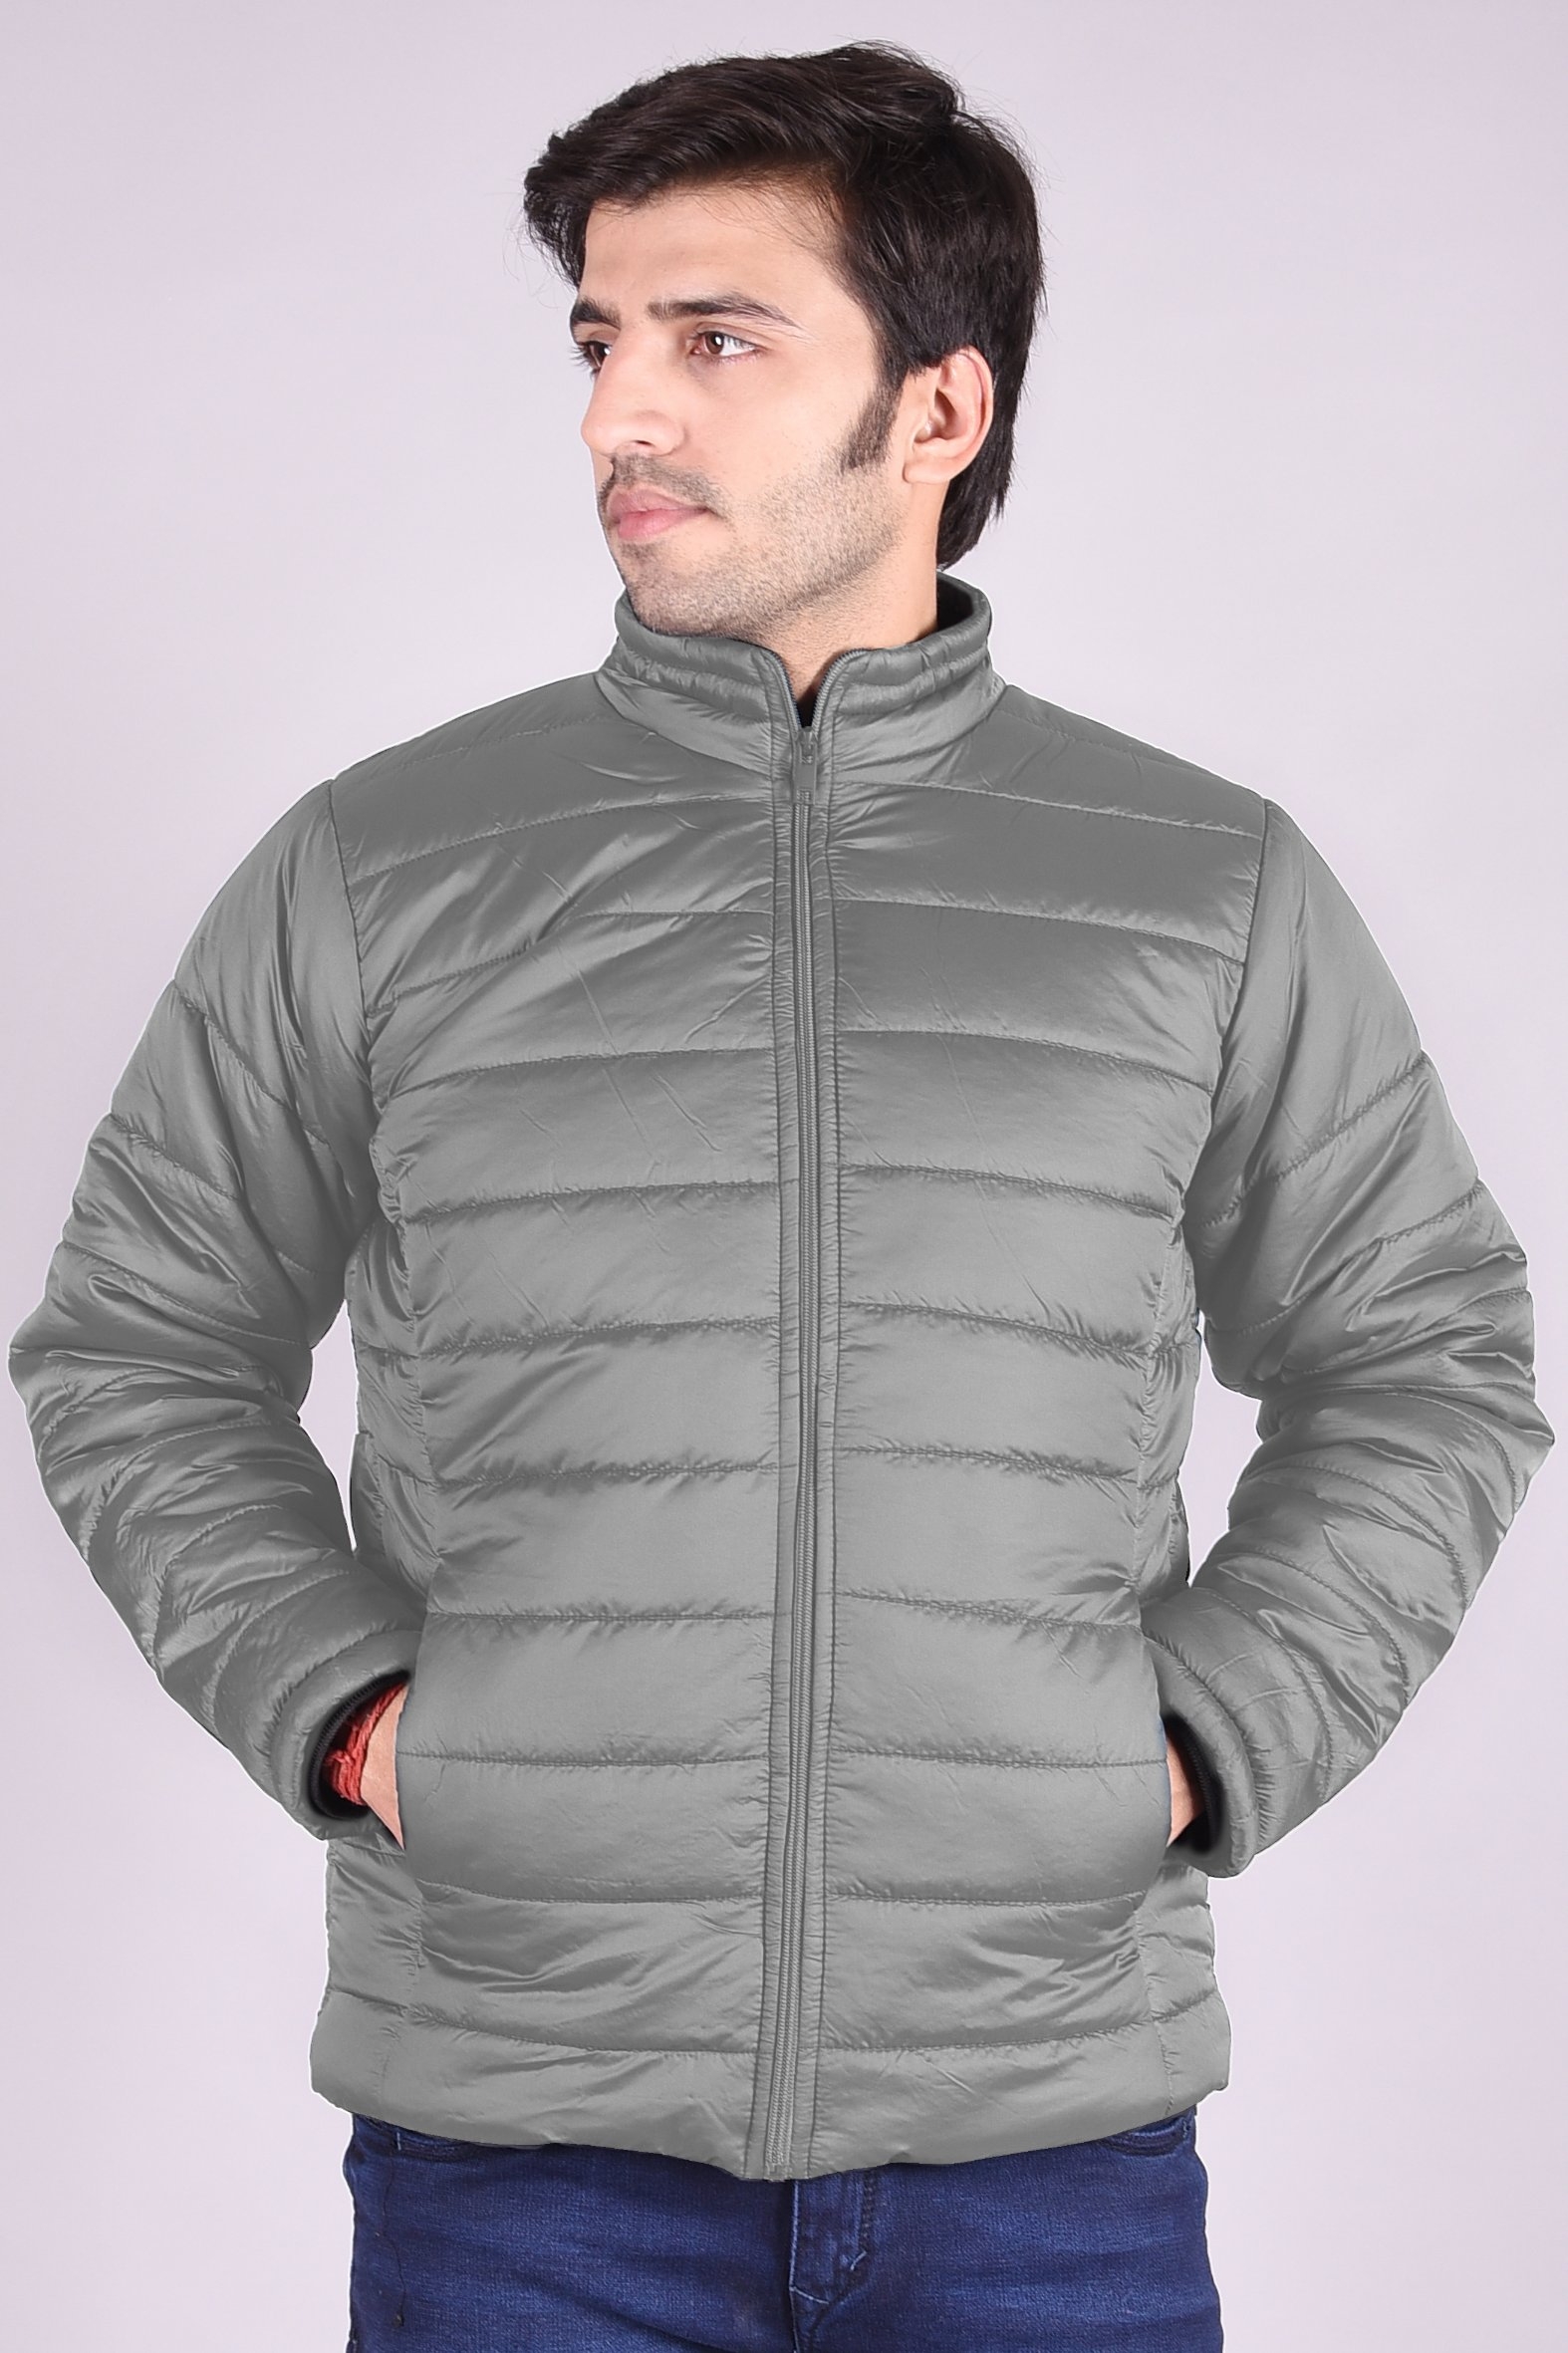 JAGURO | Men's Grey Stylish Bomber Jacket For Winter